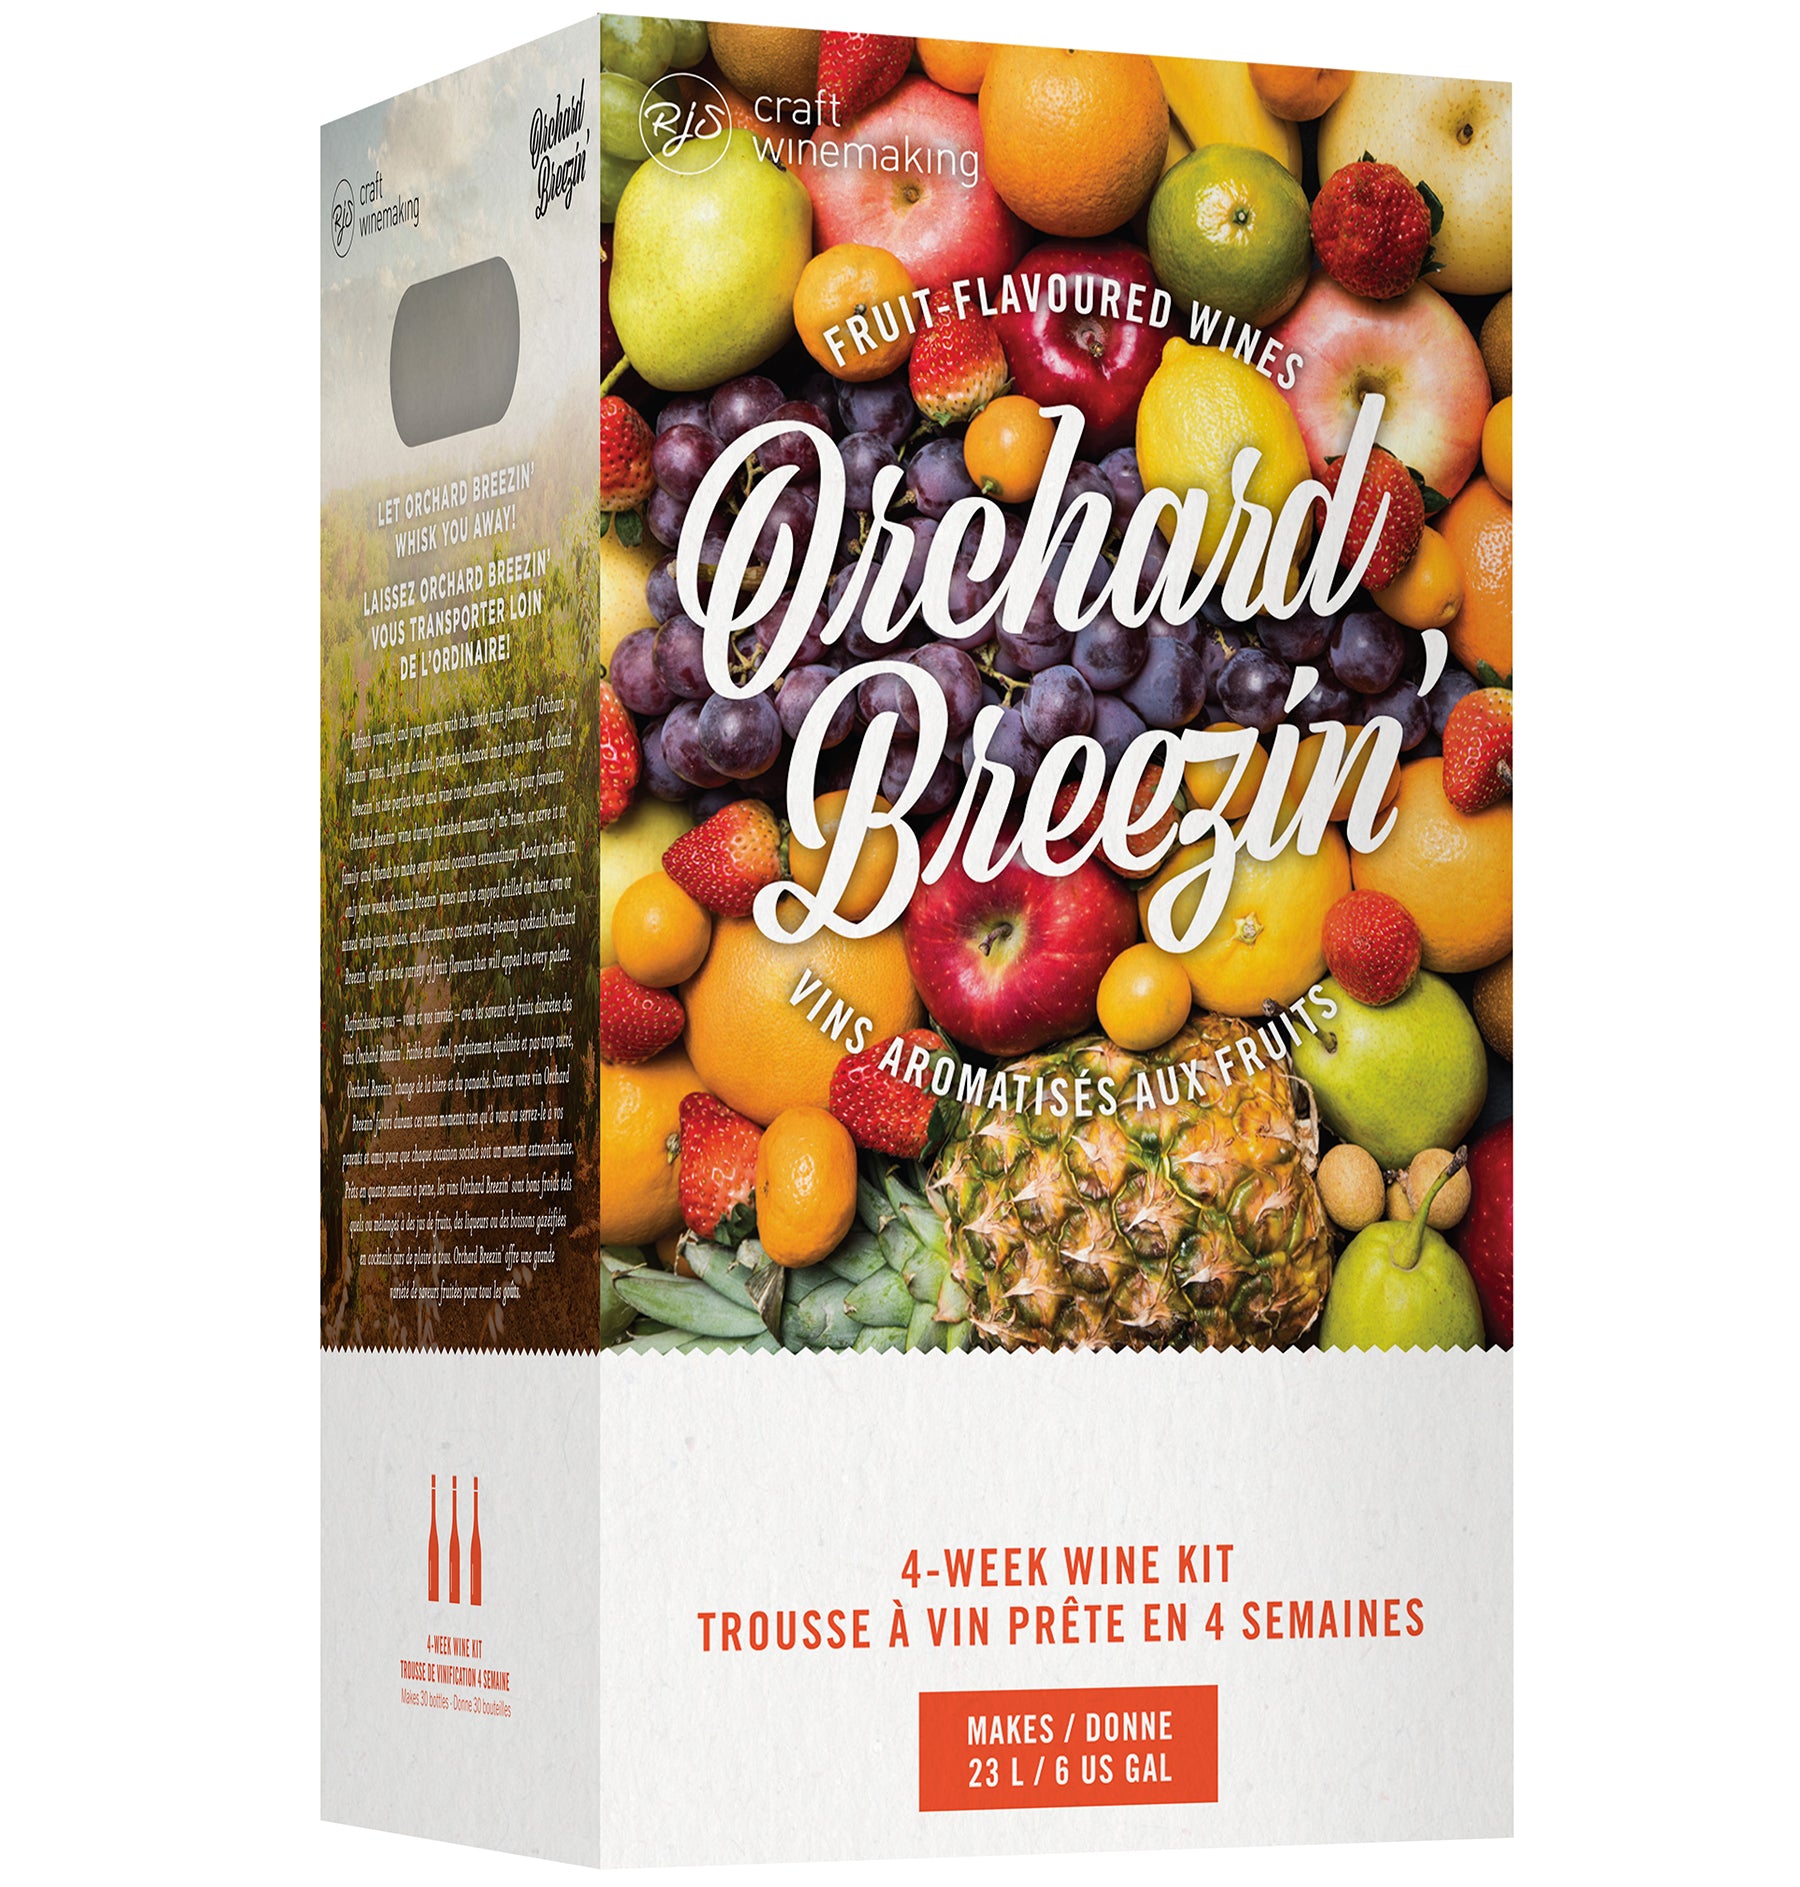 Orchard Breezin' Cranapple Celebration 6 Gallon Home Wine Making Ingredient Kit